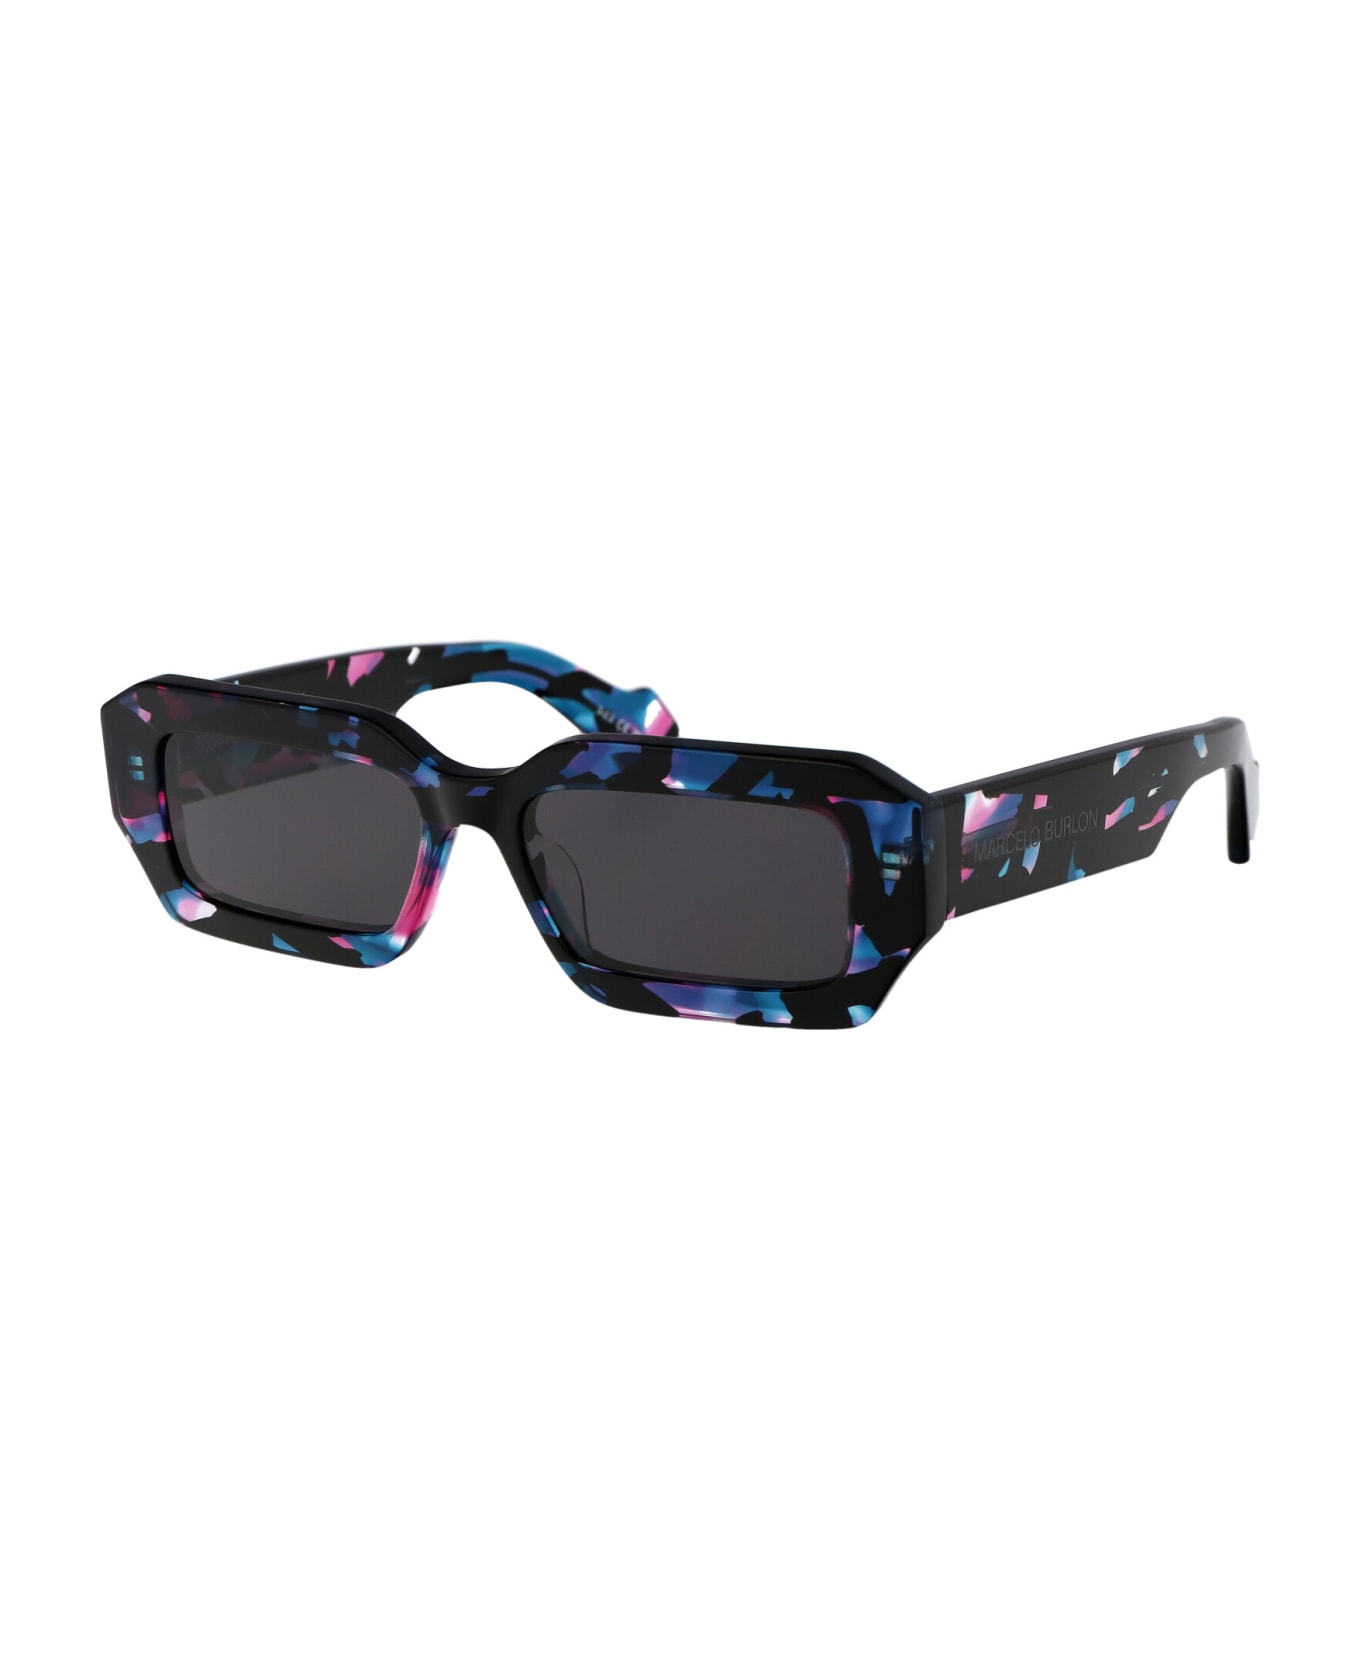 Marcelo Burlon Agave Sunglasses - 4207 HAVANA BLUE  